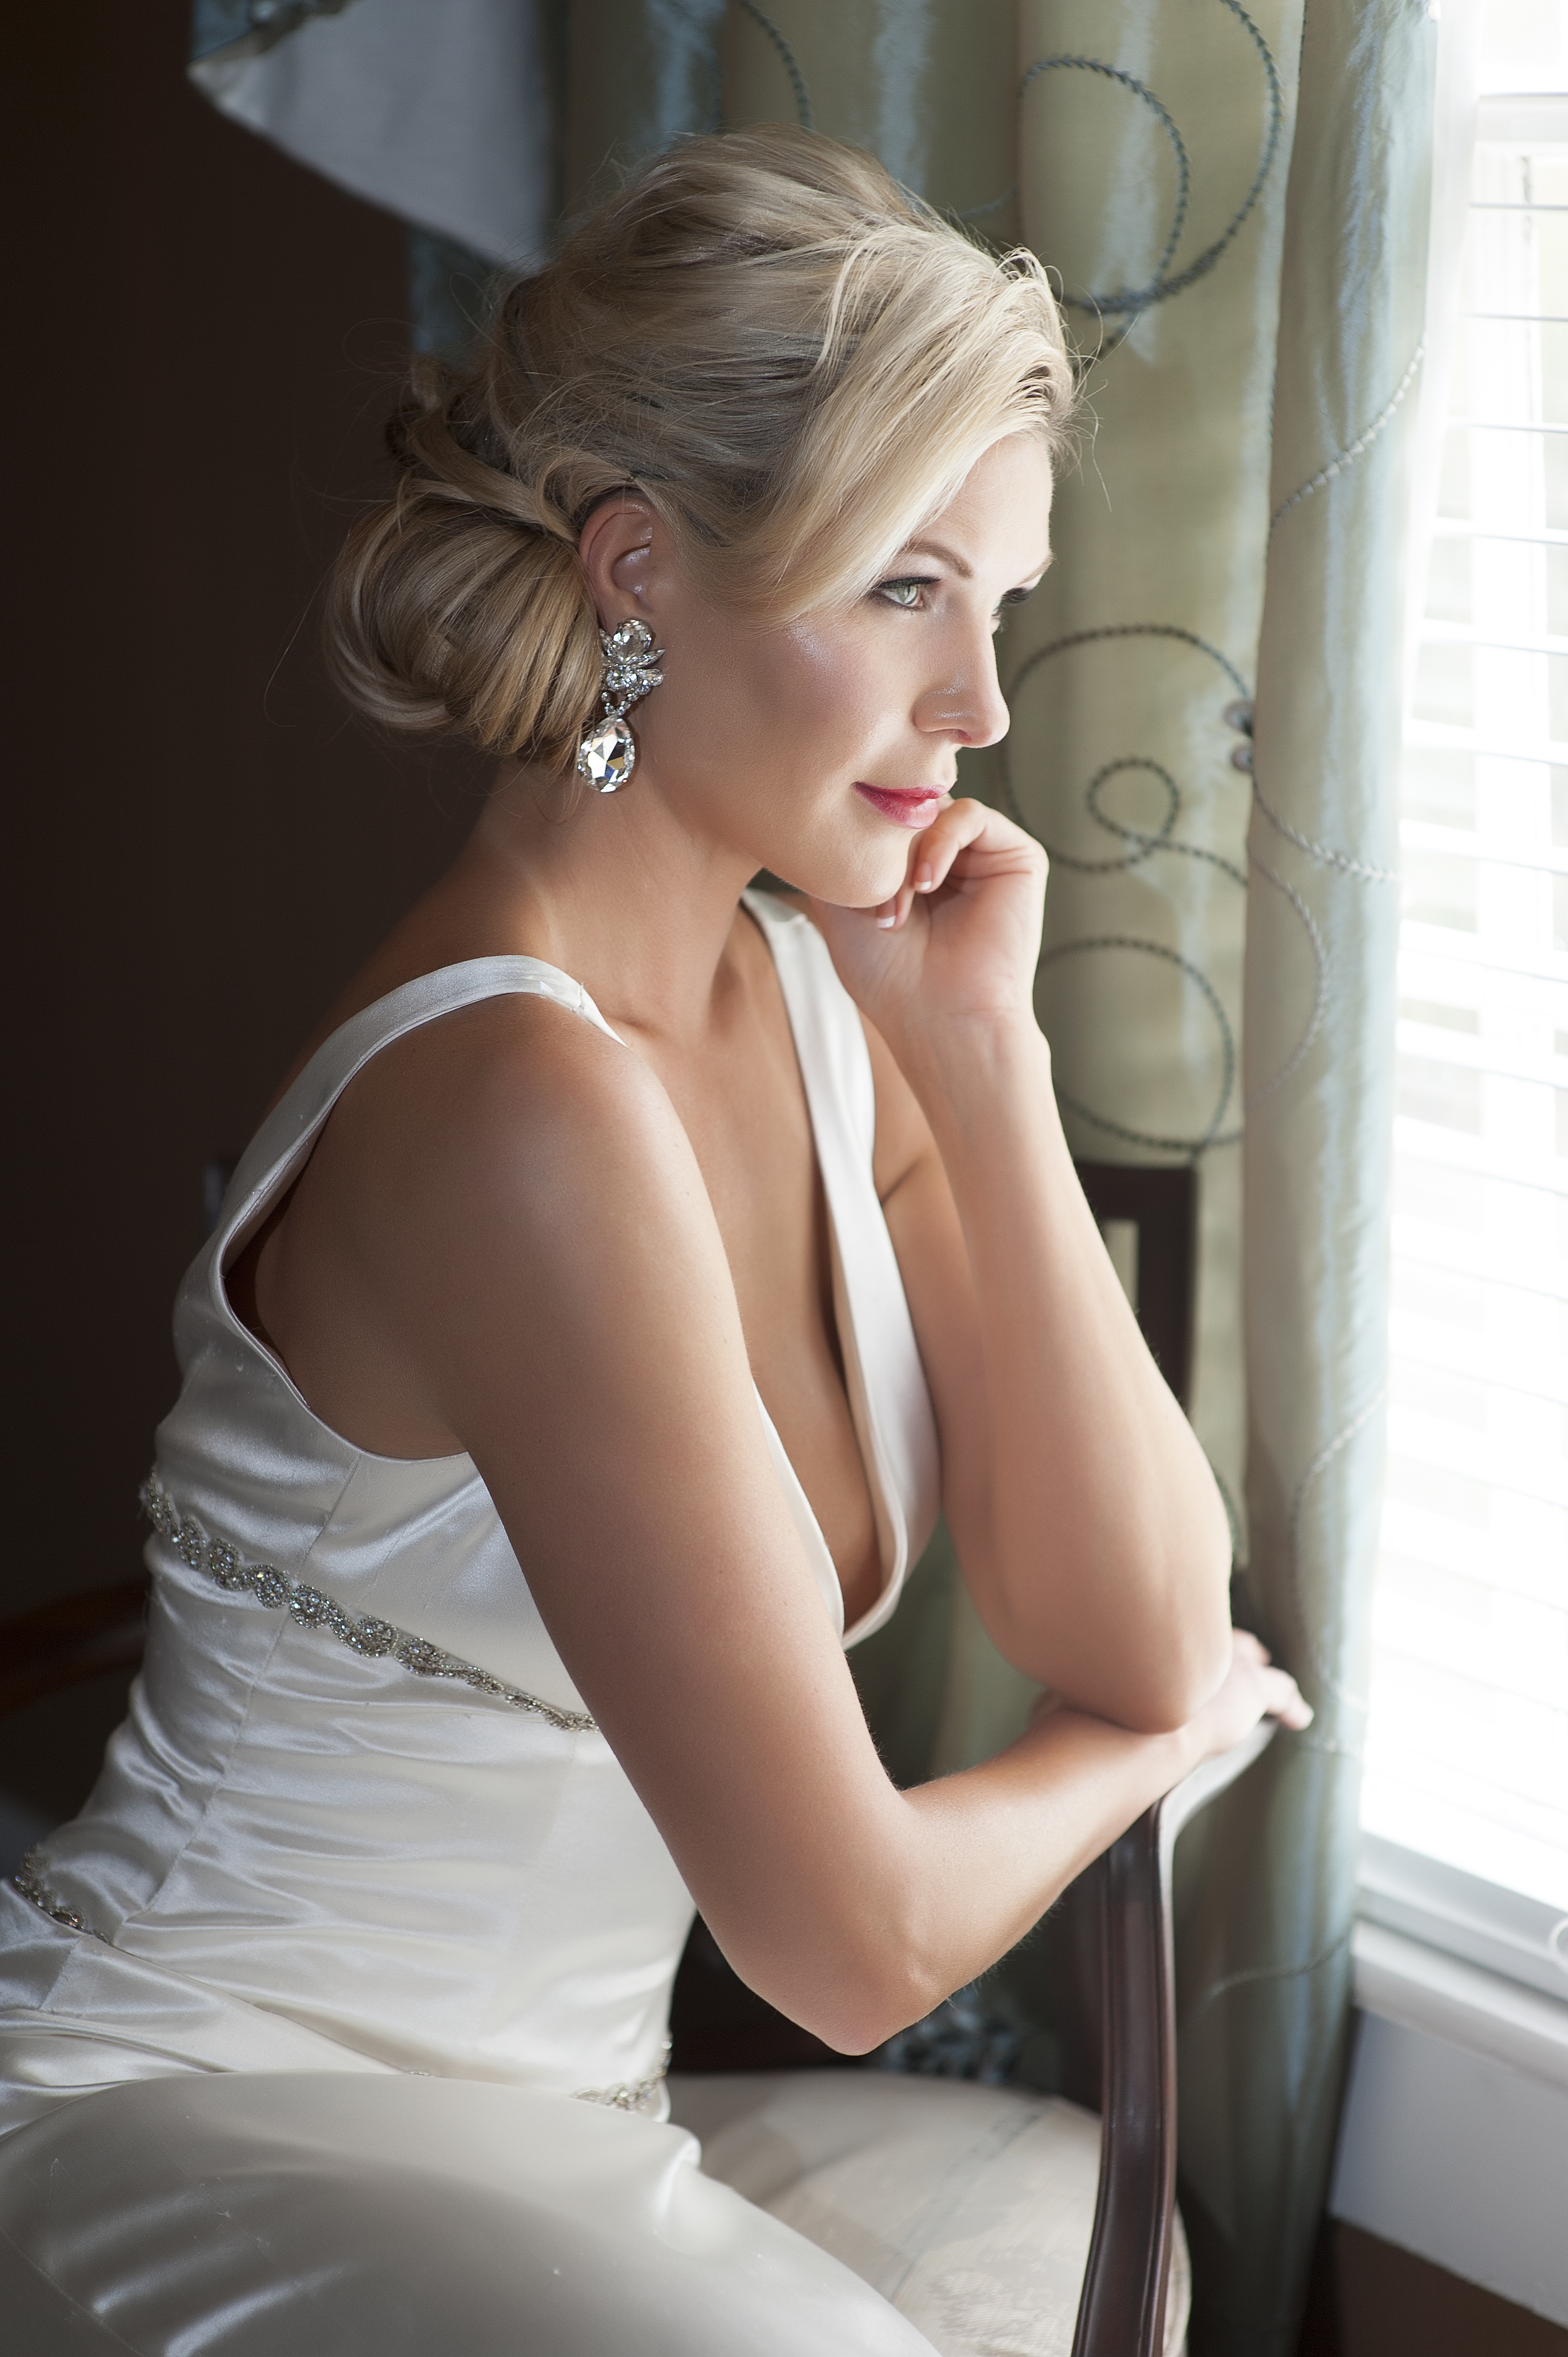 Bride at Window, Hampshire Wedding Photographers, Kenneth Light Studios - Peter Farrar